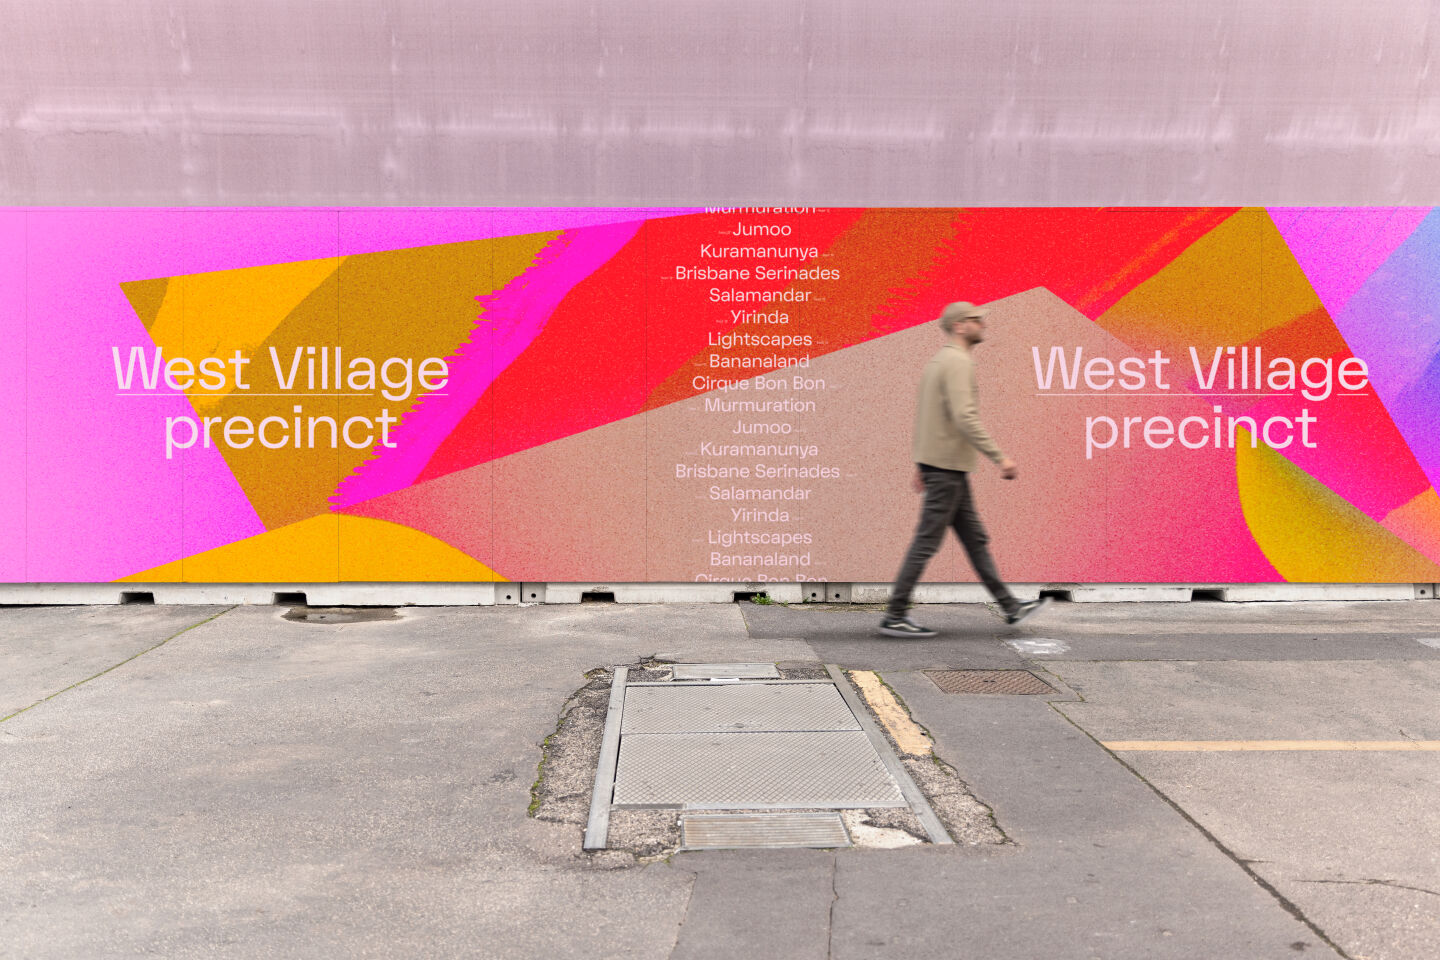 Hoarding for the West Village precinct in Brisbane, designed for the 2023 Brisbane Festival brand identity.